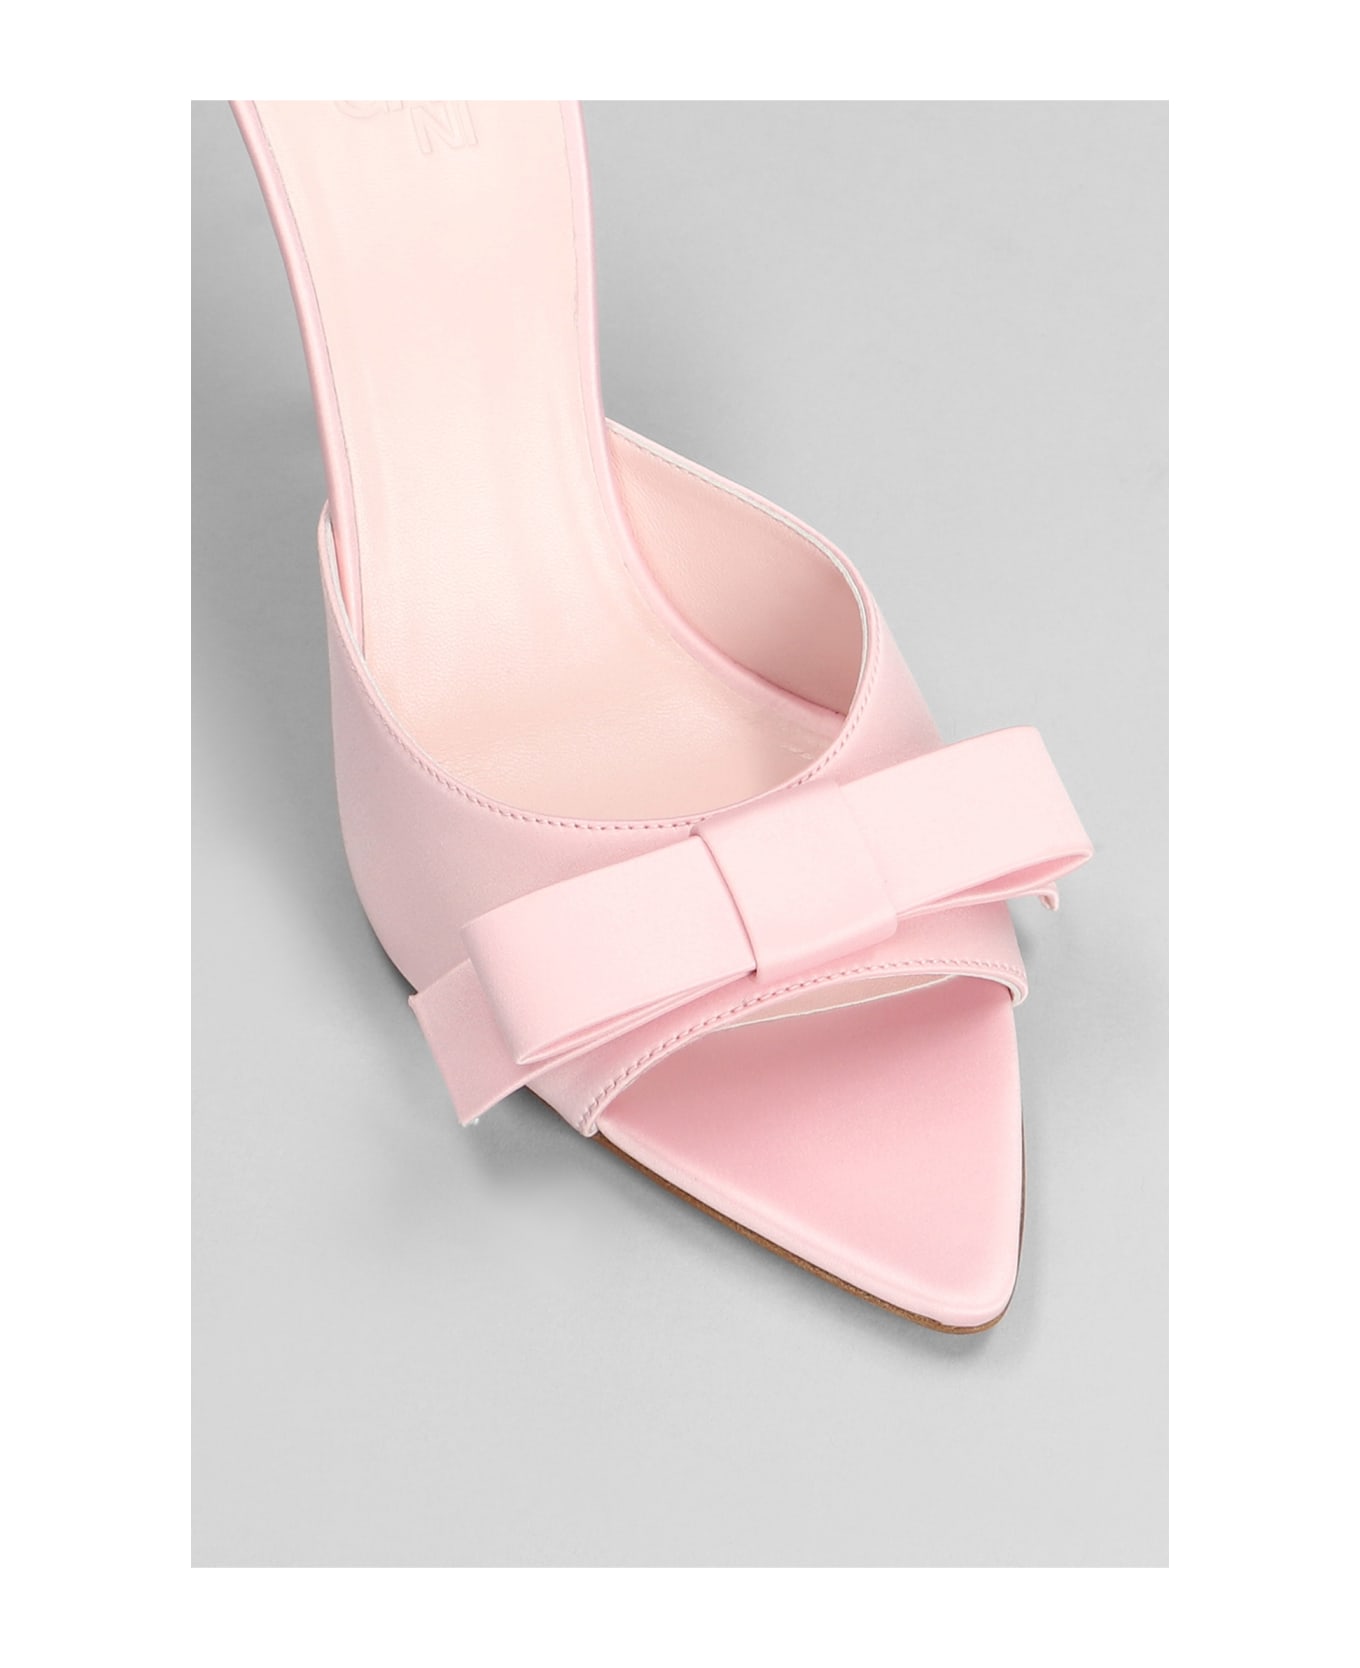 GIA BORGHINI Honorine Slipper-mule In Rose-pink Satin - rose-pink サンダル